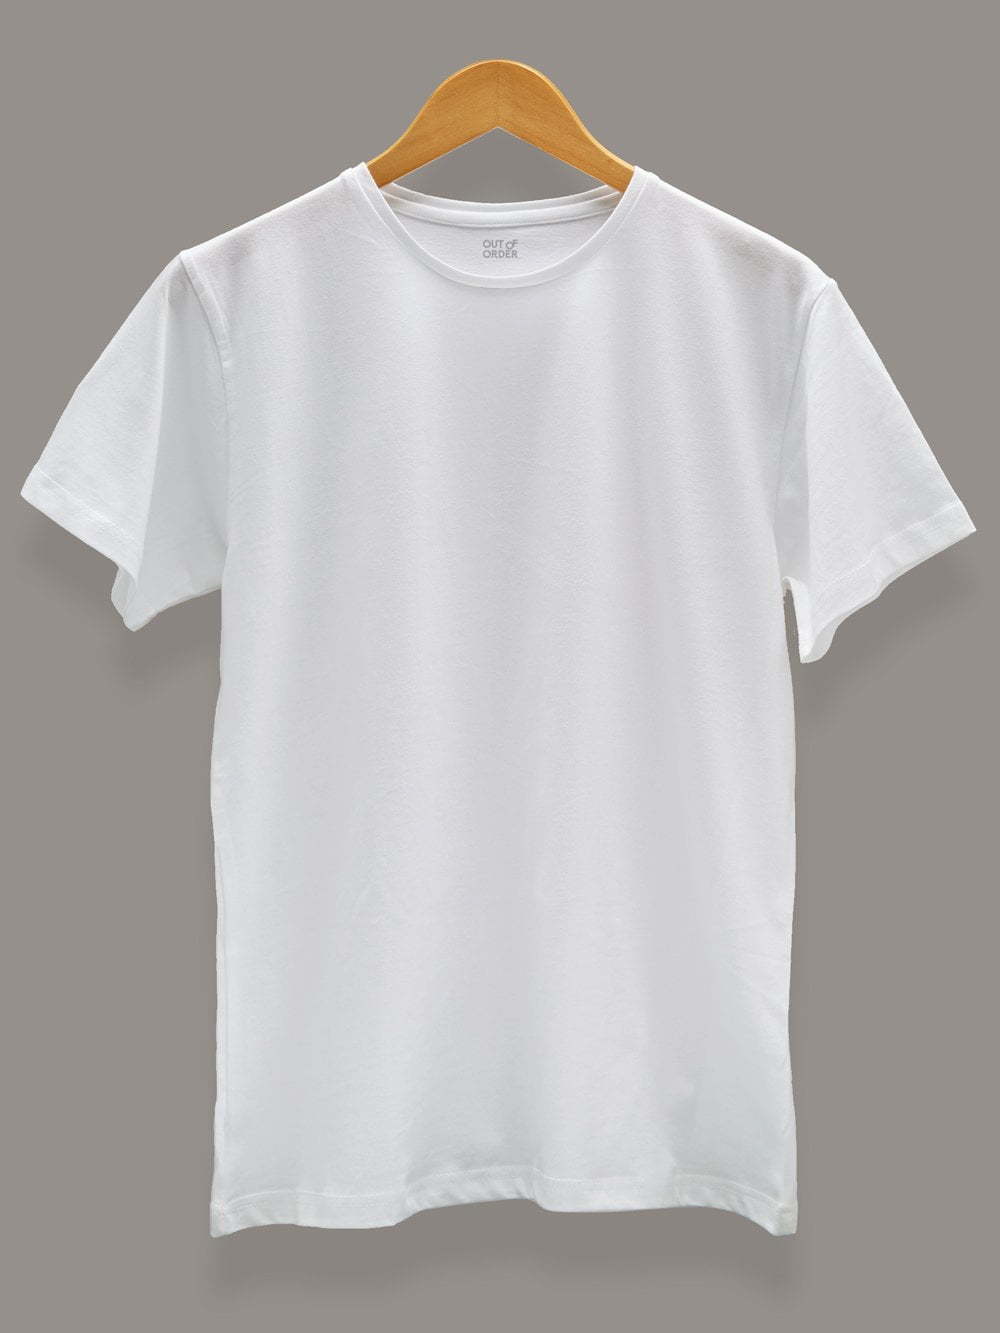 White Tee Shirt For Men Sale, 57% OFF ...